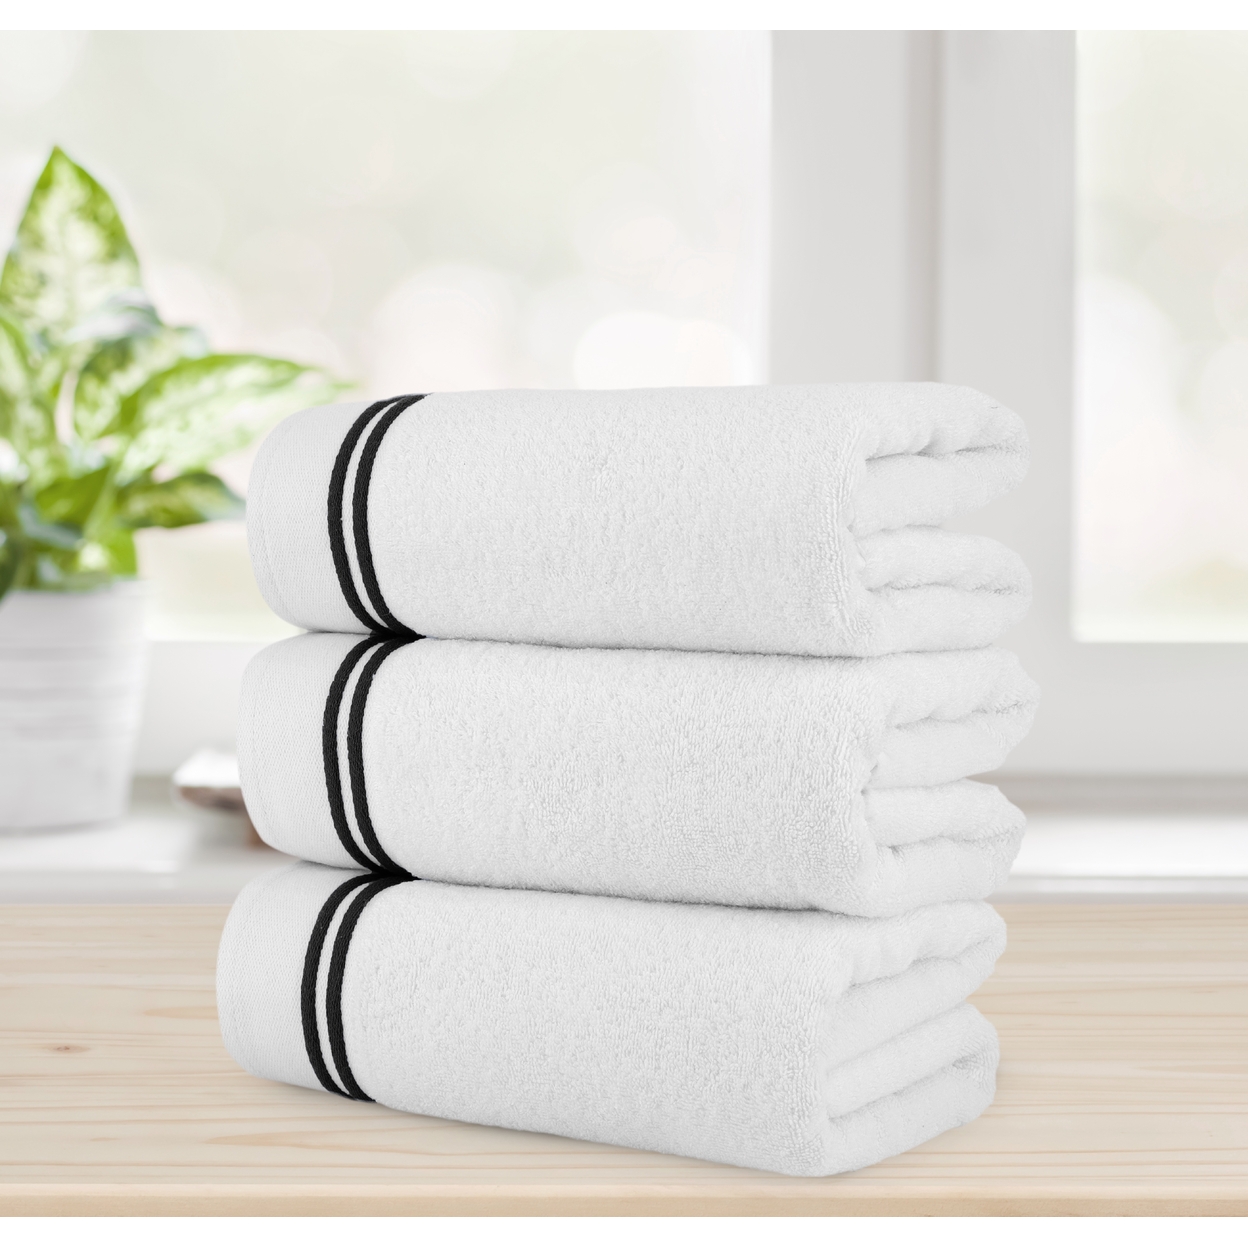 Chic Home Luxurious 3-Piece 100% Pure Turkish Cotton White Bath Towels, 30 X 60, Striped Hem, OEKO-TEX Certified Set - White-black